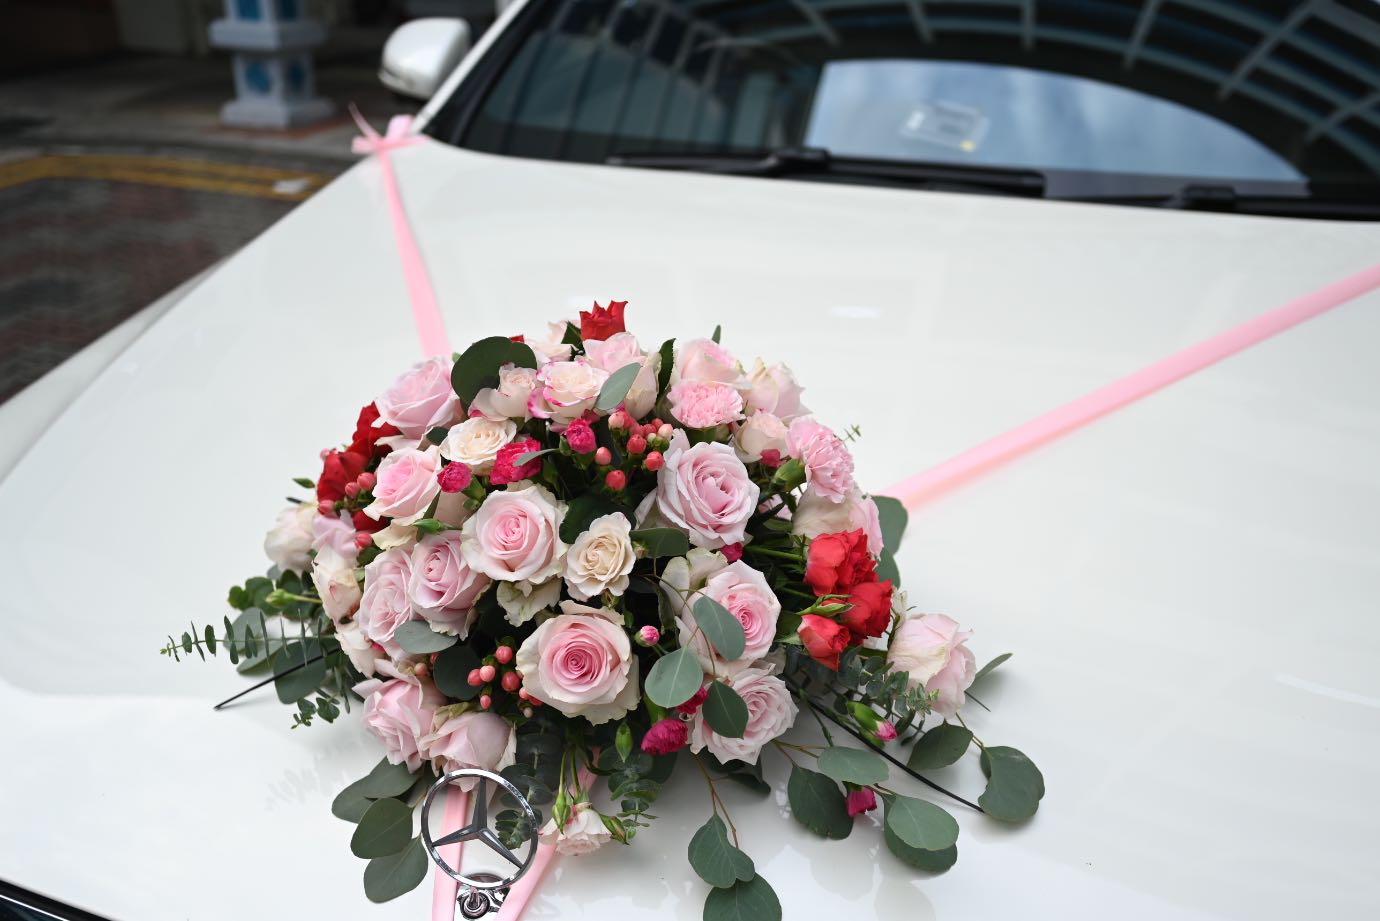 https://media.karousell.com/media/photos/products/2022/8/2/fresh_flowers_bridal_car_decor_1659418575_bed41e43_progressive.jpg